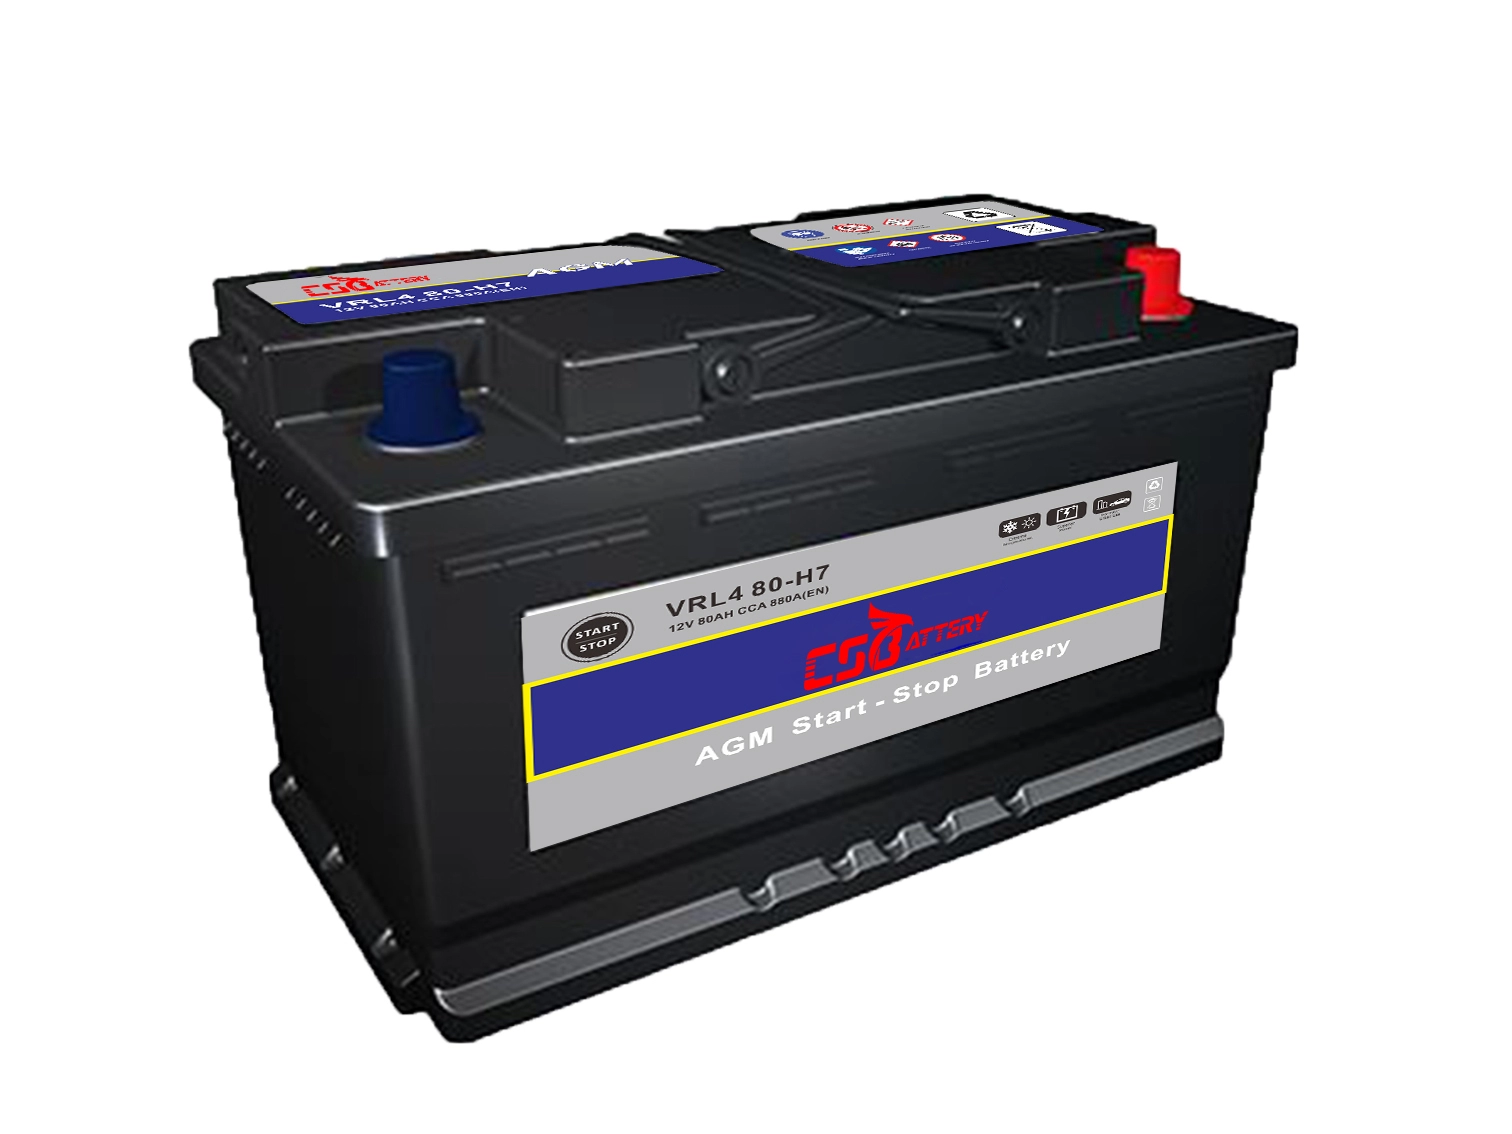 CSBattery VRL2 60-H5 Start-Stop AGM Car Battery--Ada